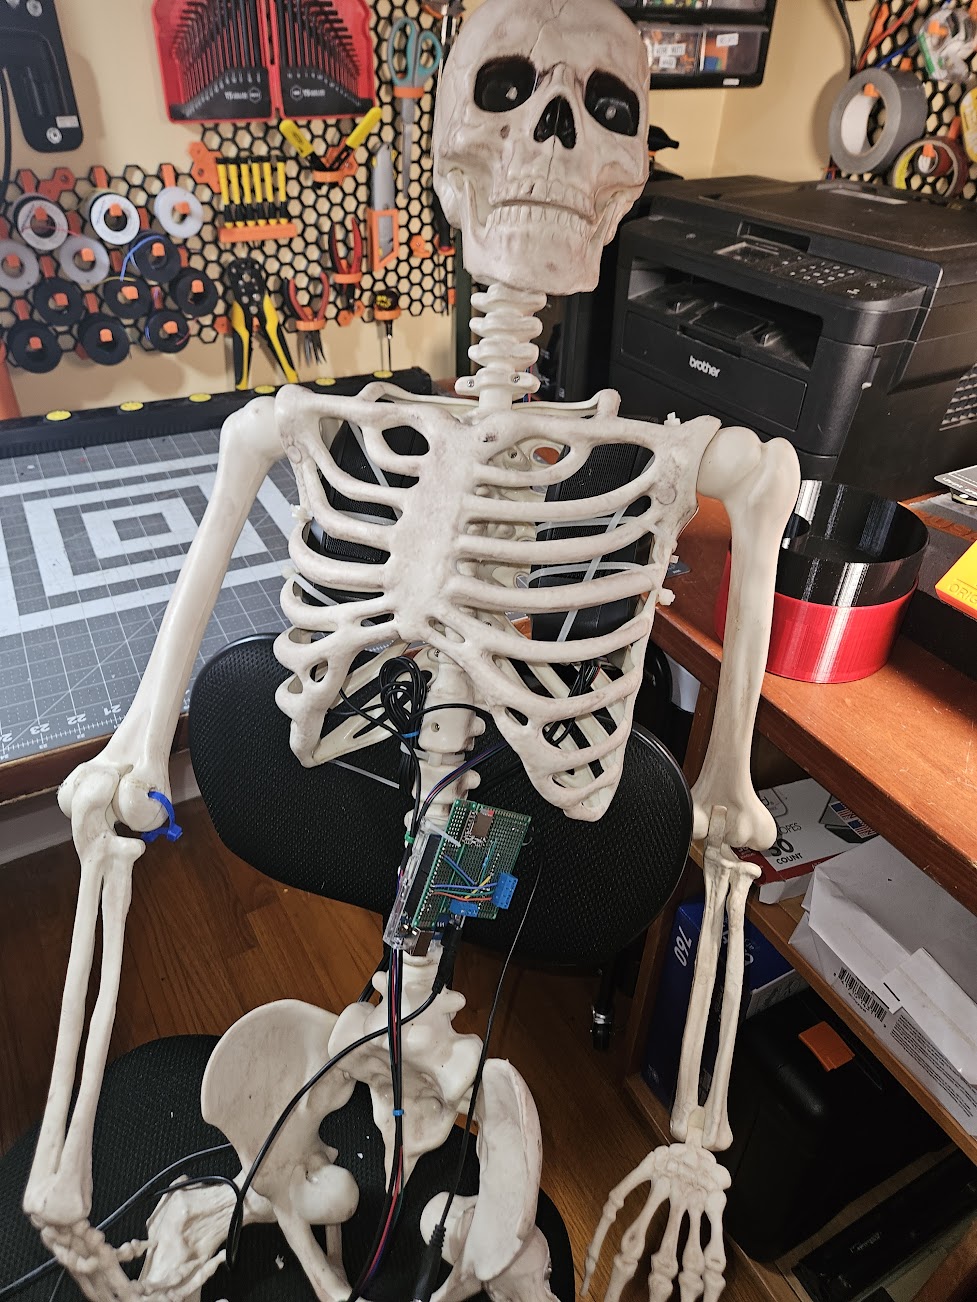 Skeleton with speaker in ribs